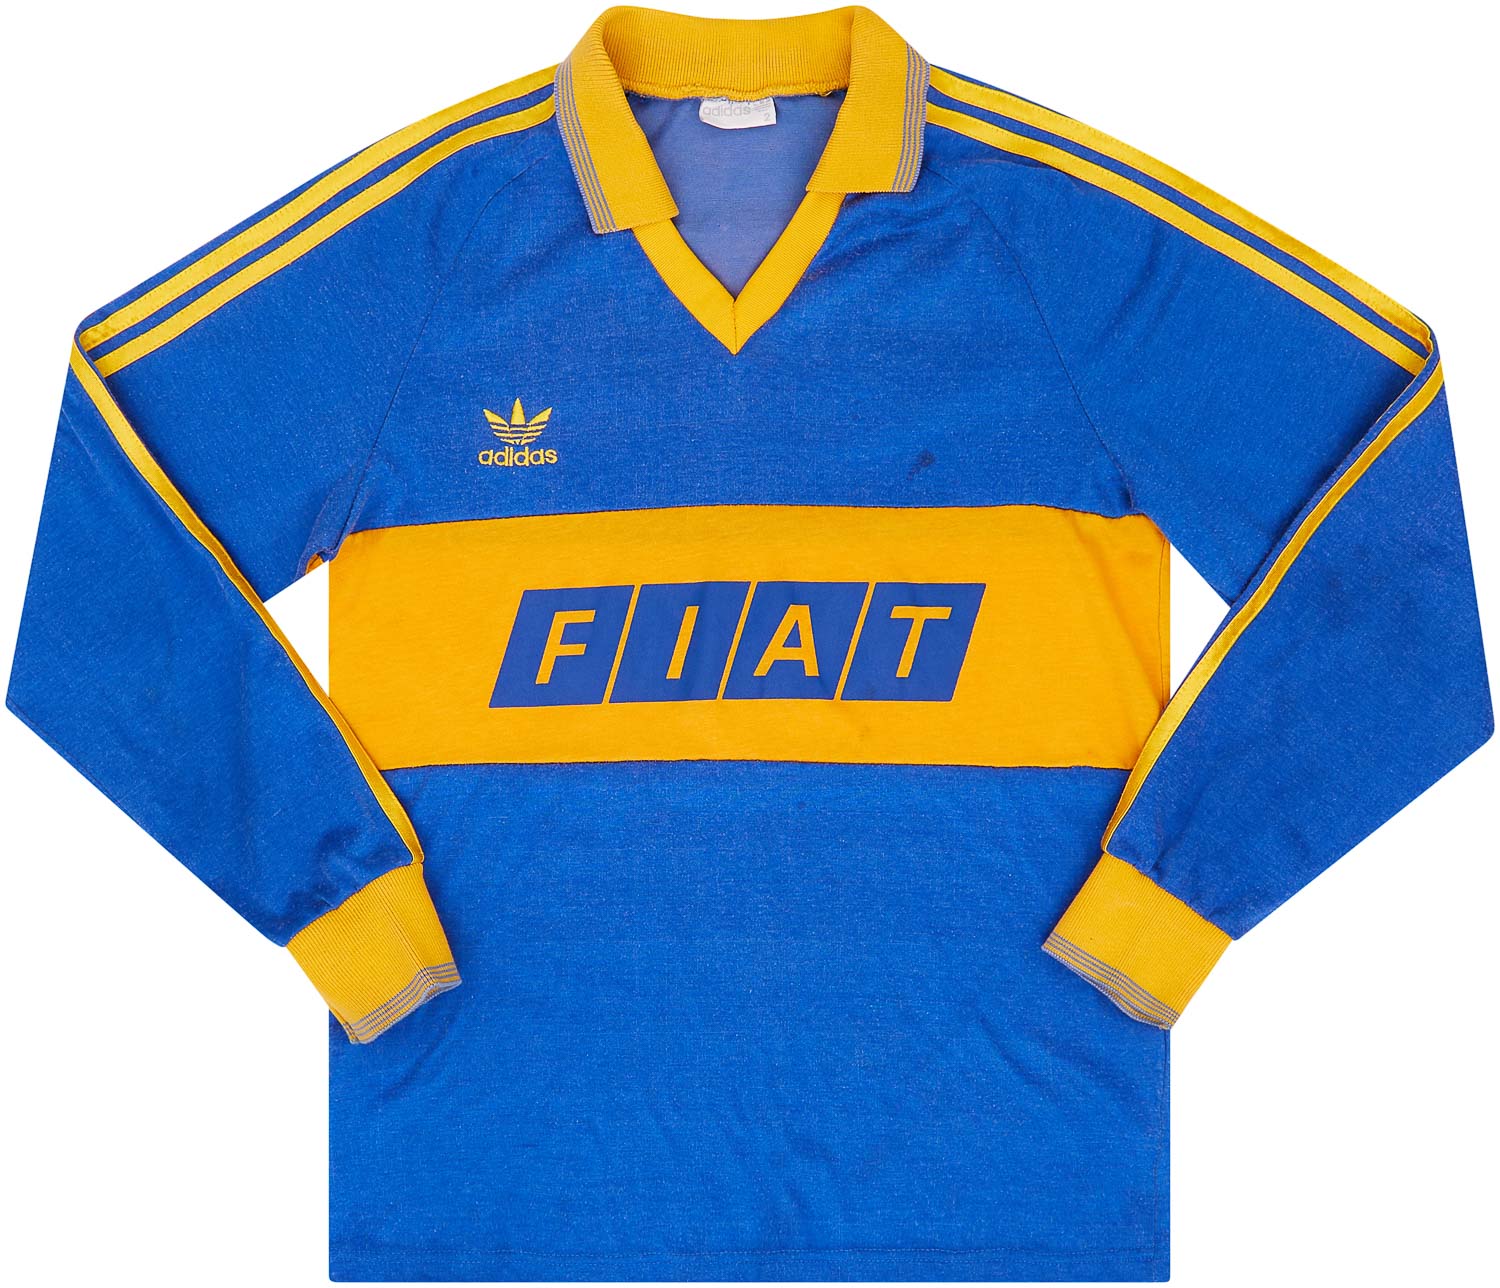 1989-90 Boca Juniors Home Shirt - Very Good 7/10 - ()